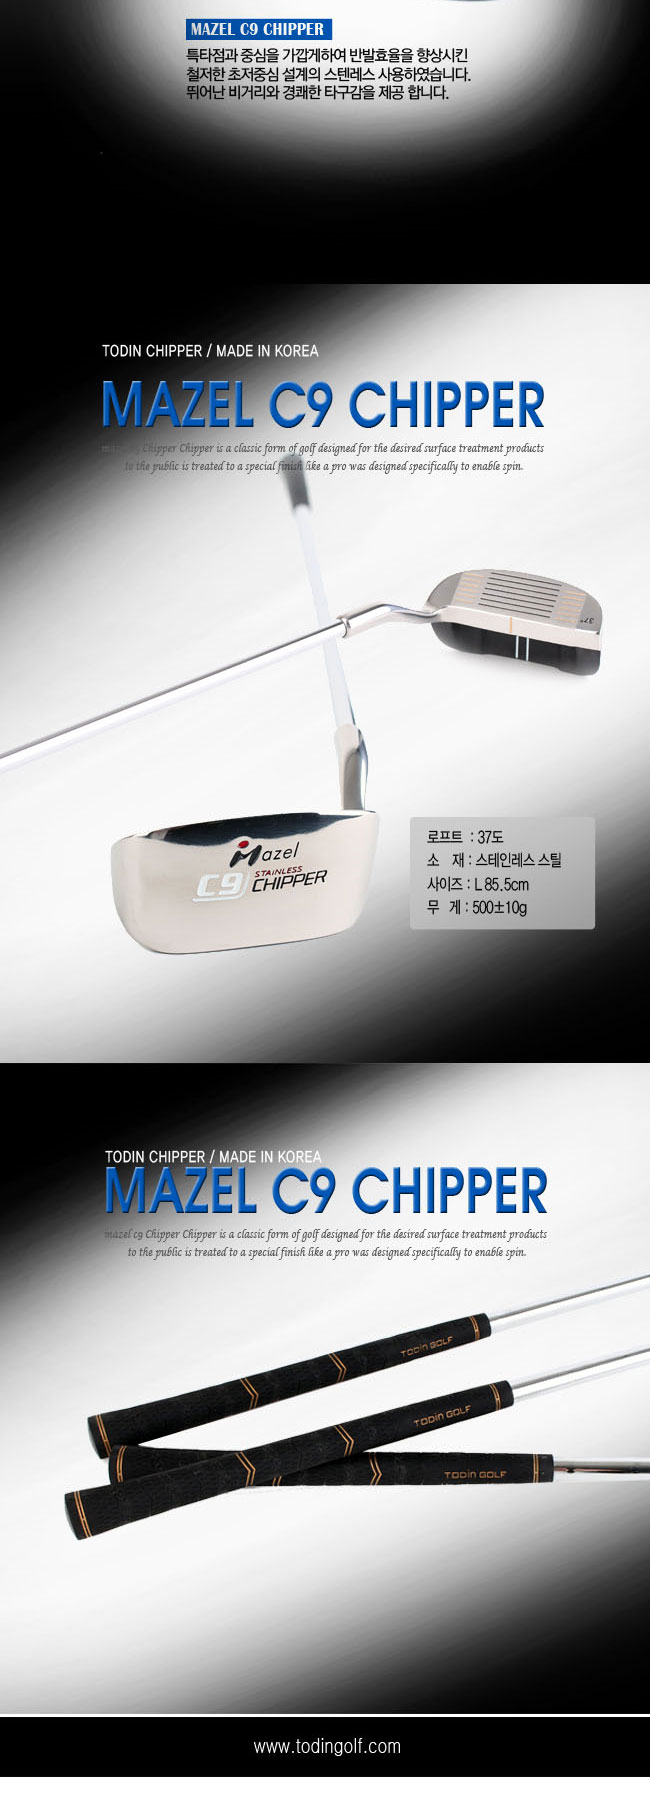 mazel-c9-chipper_02_172211.jpg